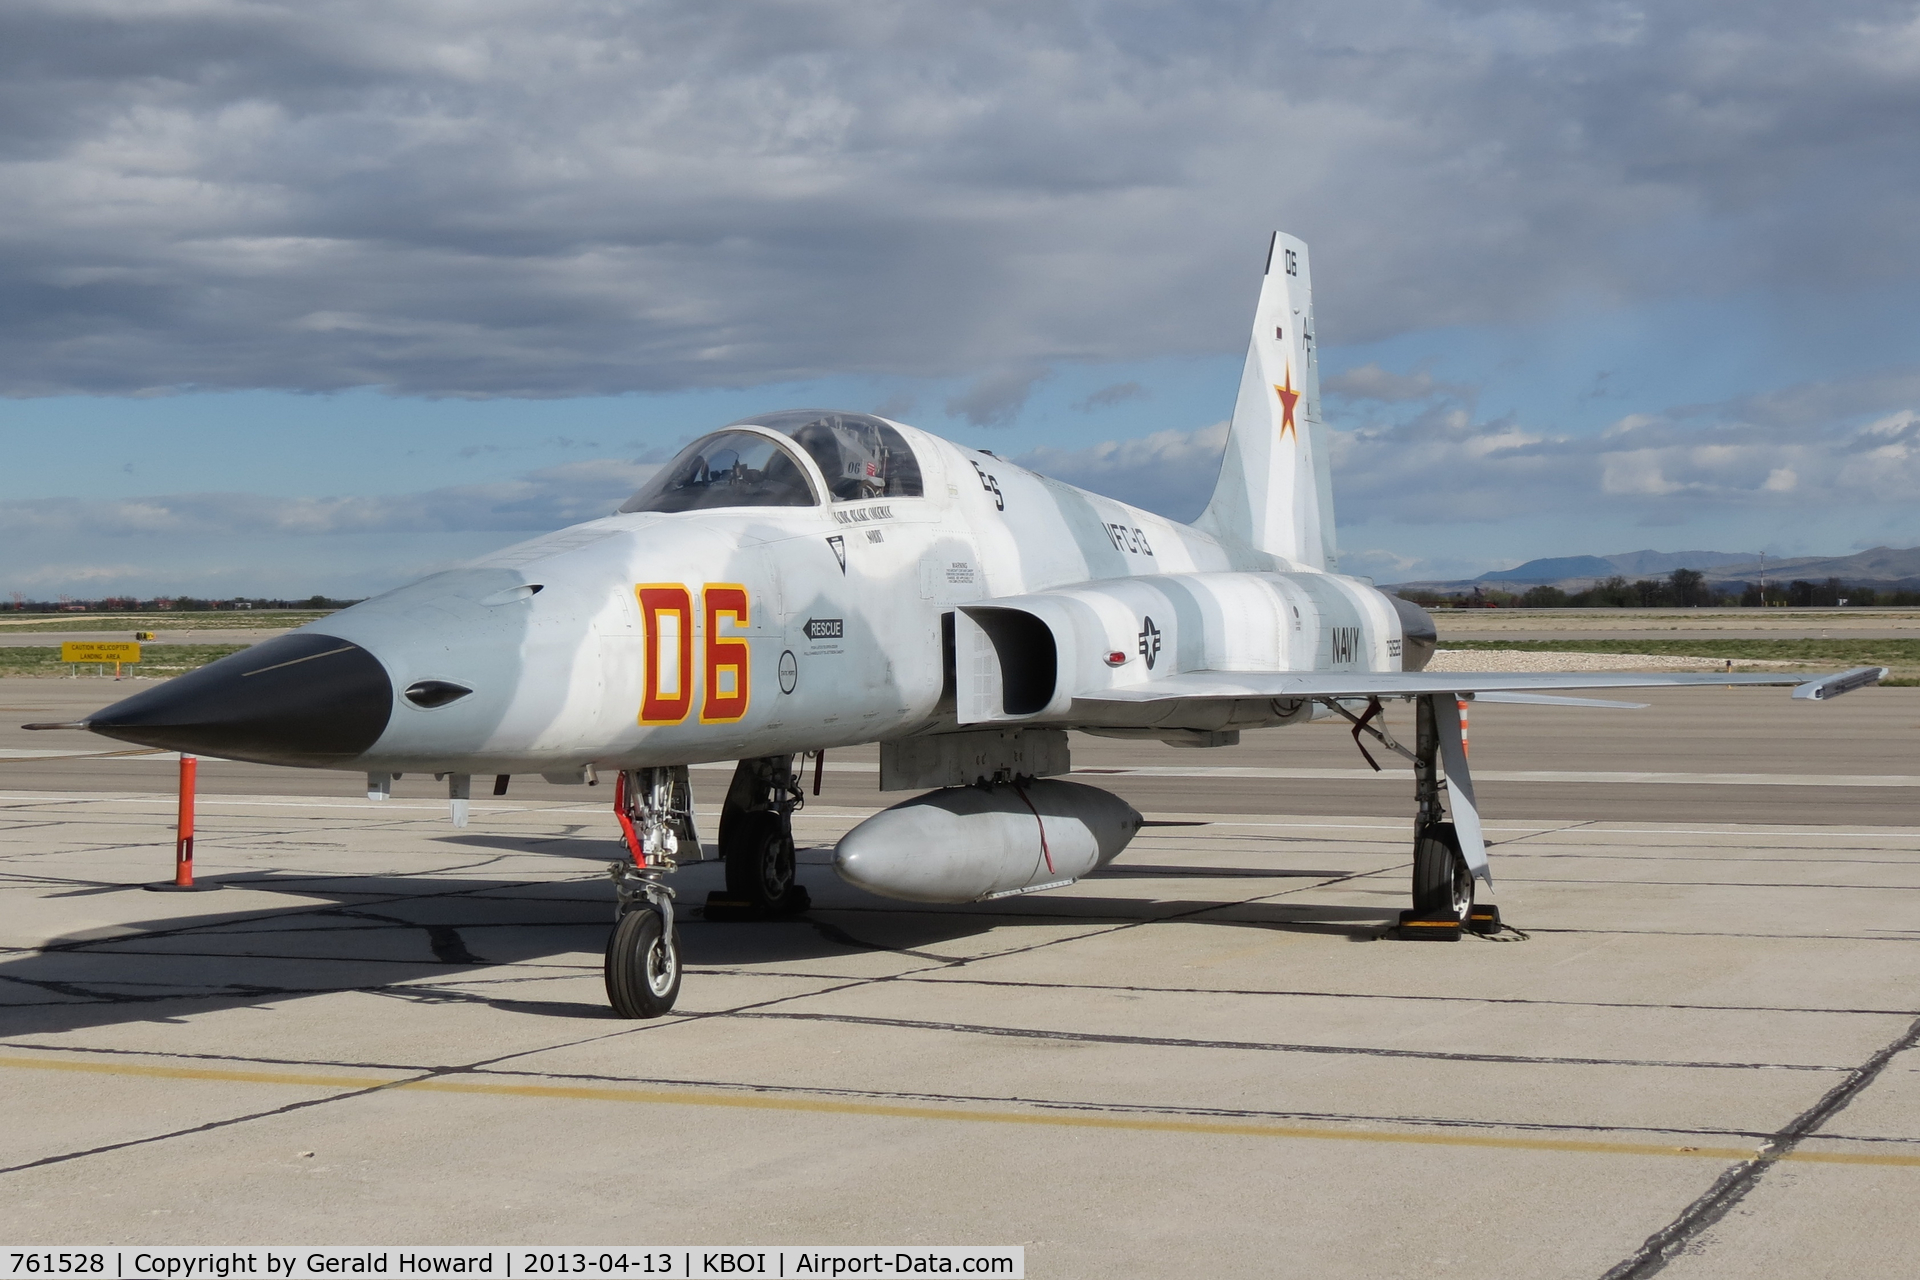 761528, Northrop F-5N Tiger II C/N L.1003, VFC-13  “Saints”, NAS Fallon, NV